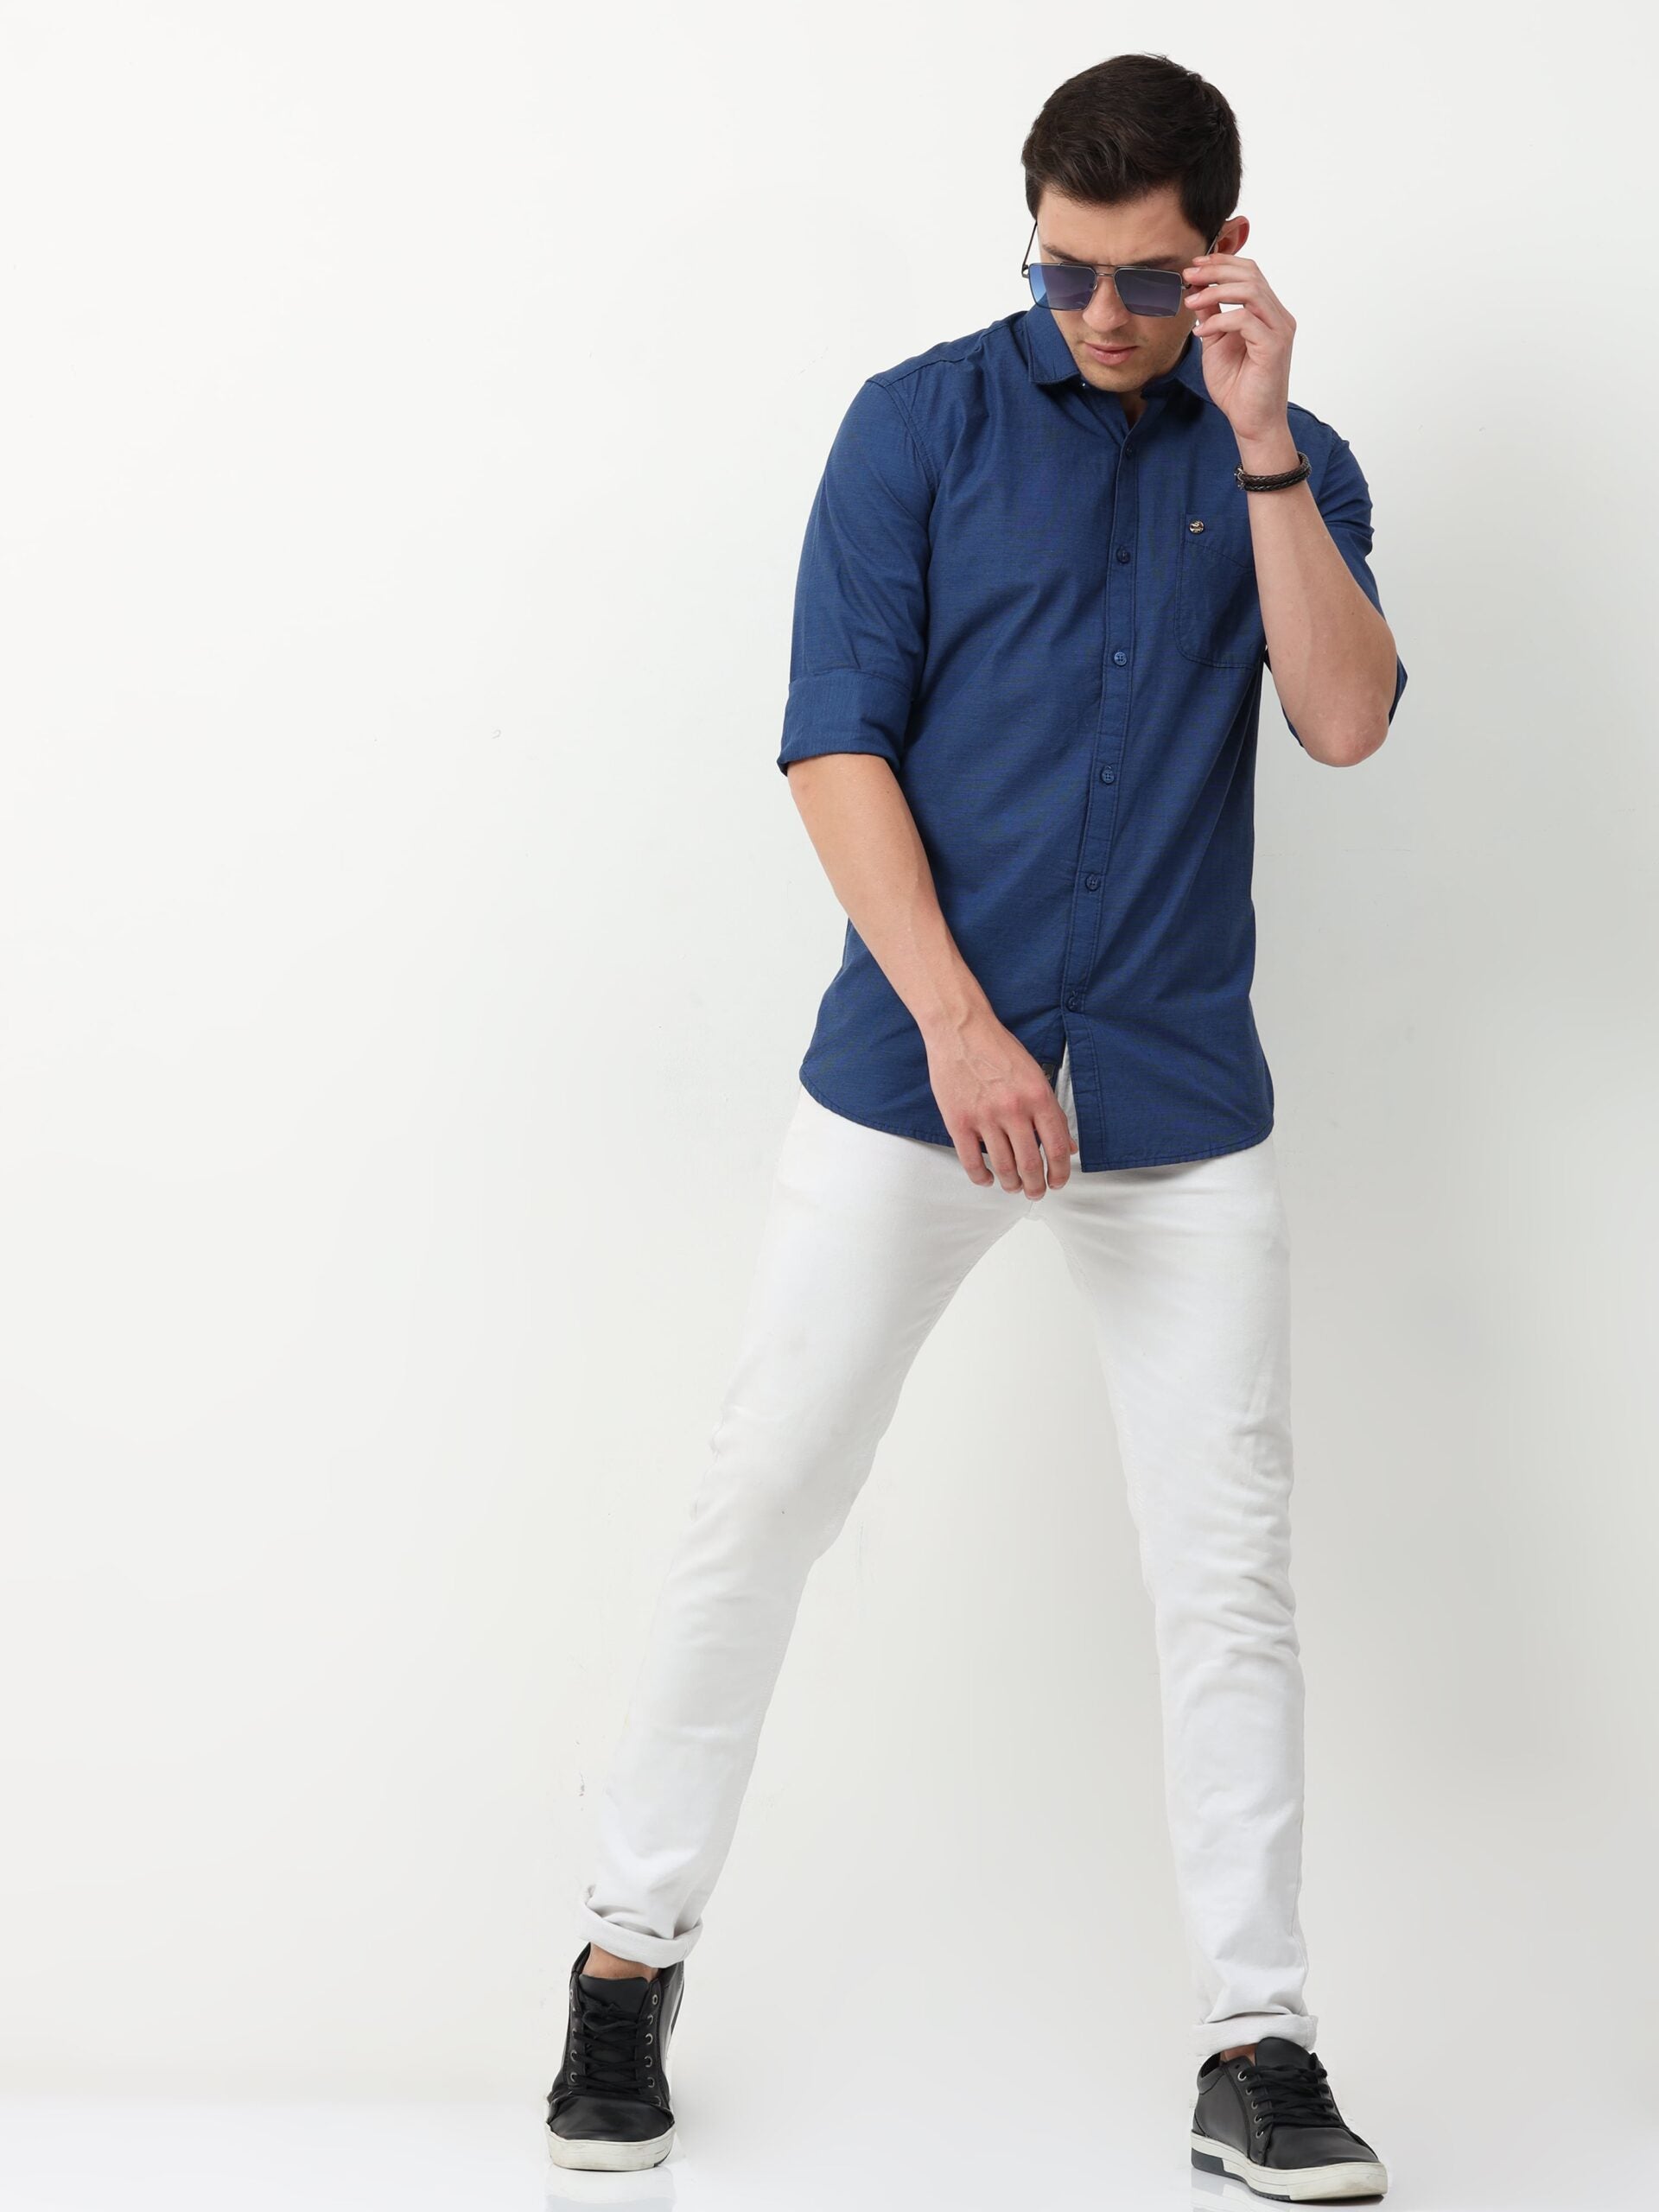 Premium Quality fashionable casual cotton shirt comfortable casual